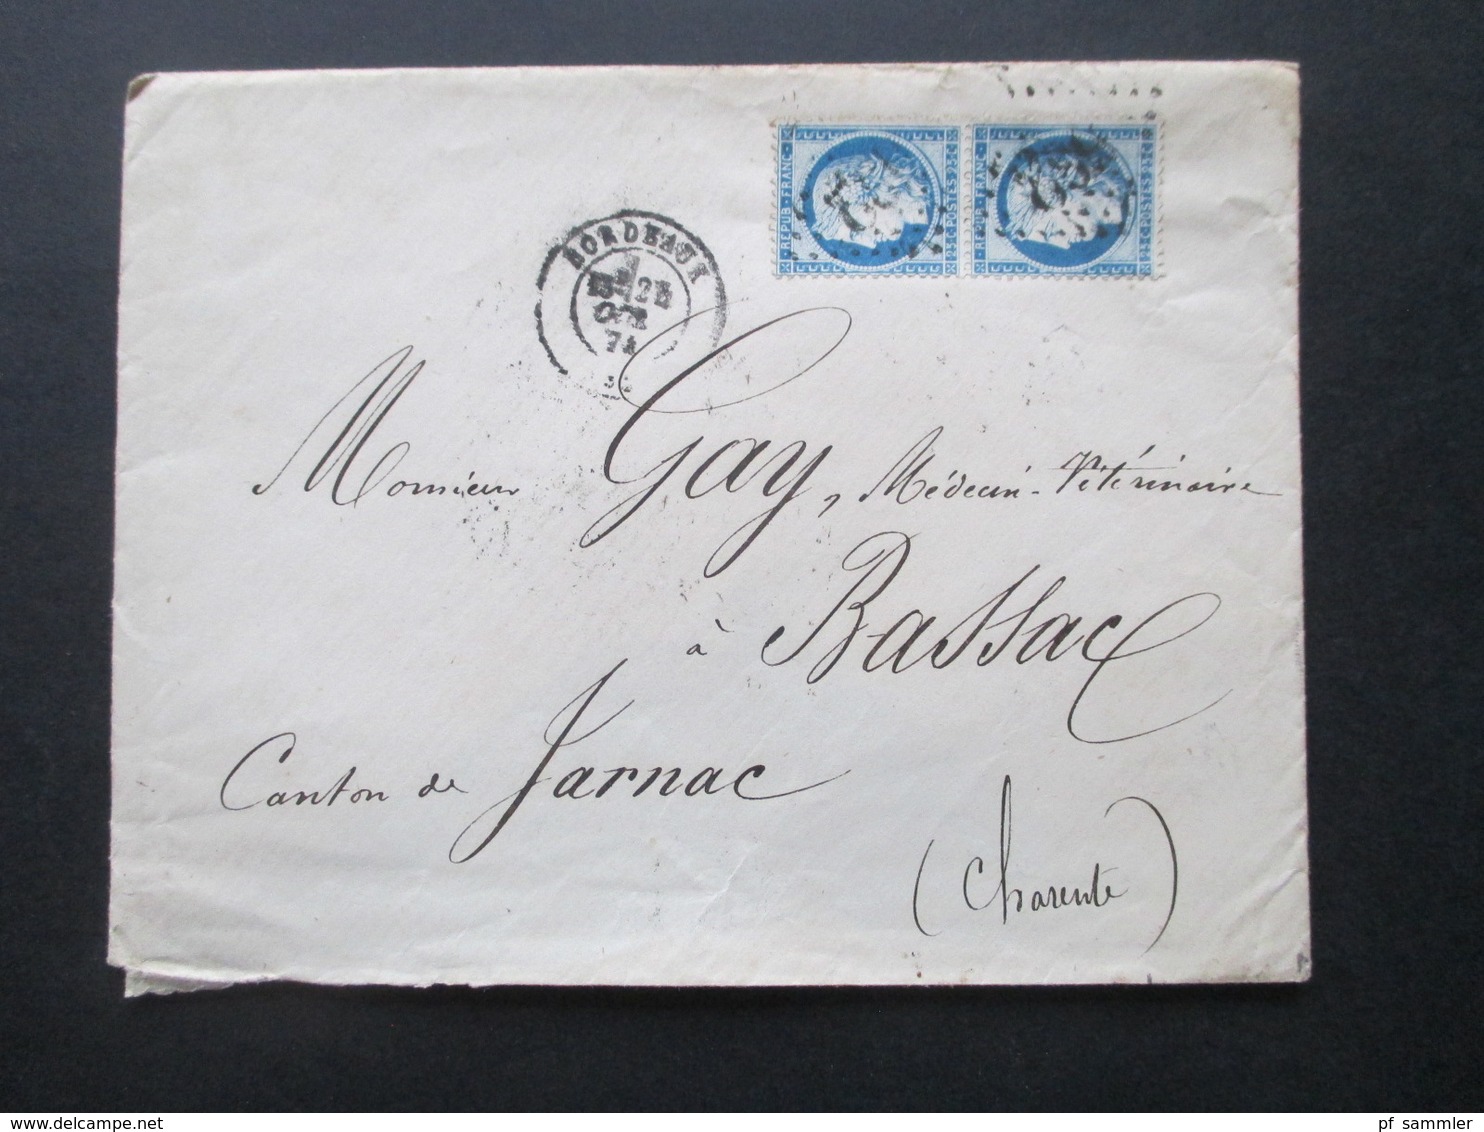 Frankreich 1874 Ceres Nr. 51 MeF Nummernstempel Bordeaux Nach Bassac Canton De Jarnac Charante Mit Inhalt!! - 1871-1875 Ceres